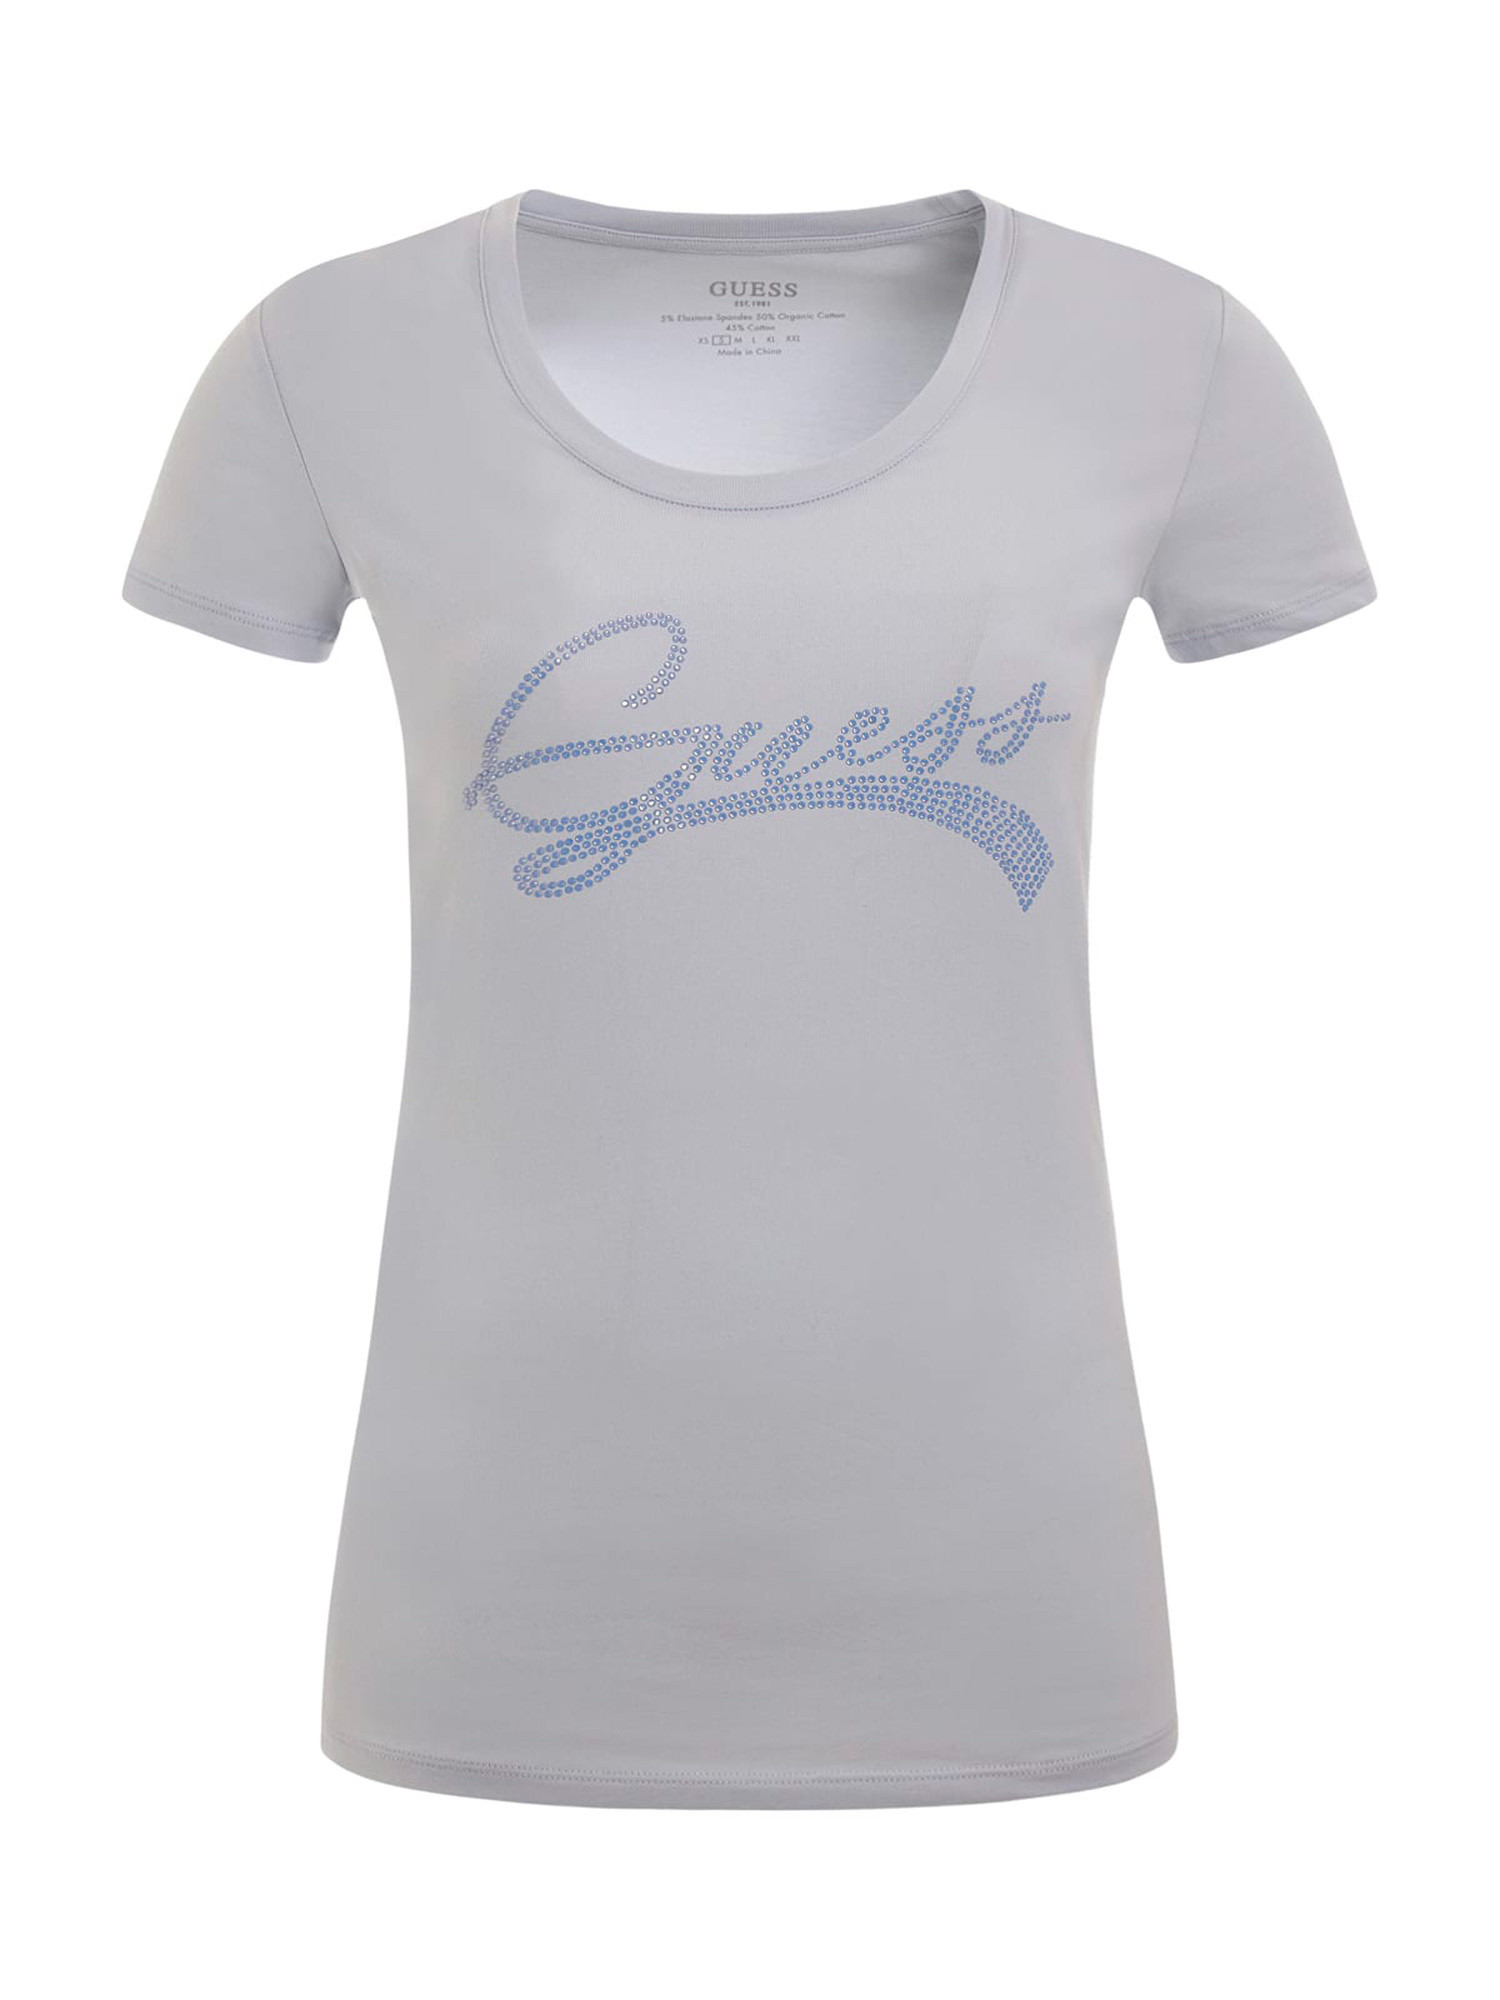 Guess - Slim fit rhinestone logo t-shirt, White, large image number 0